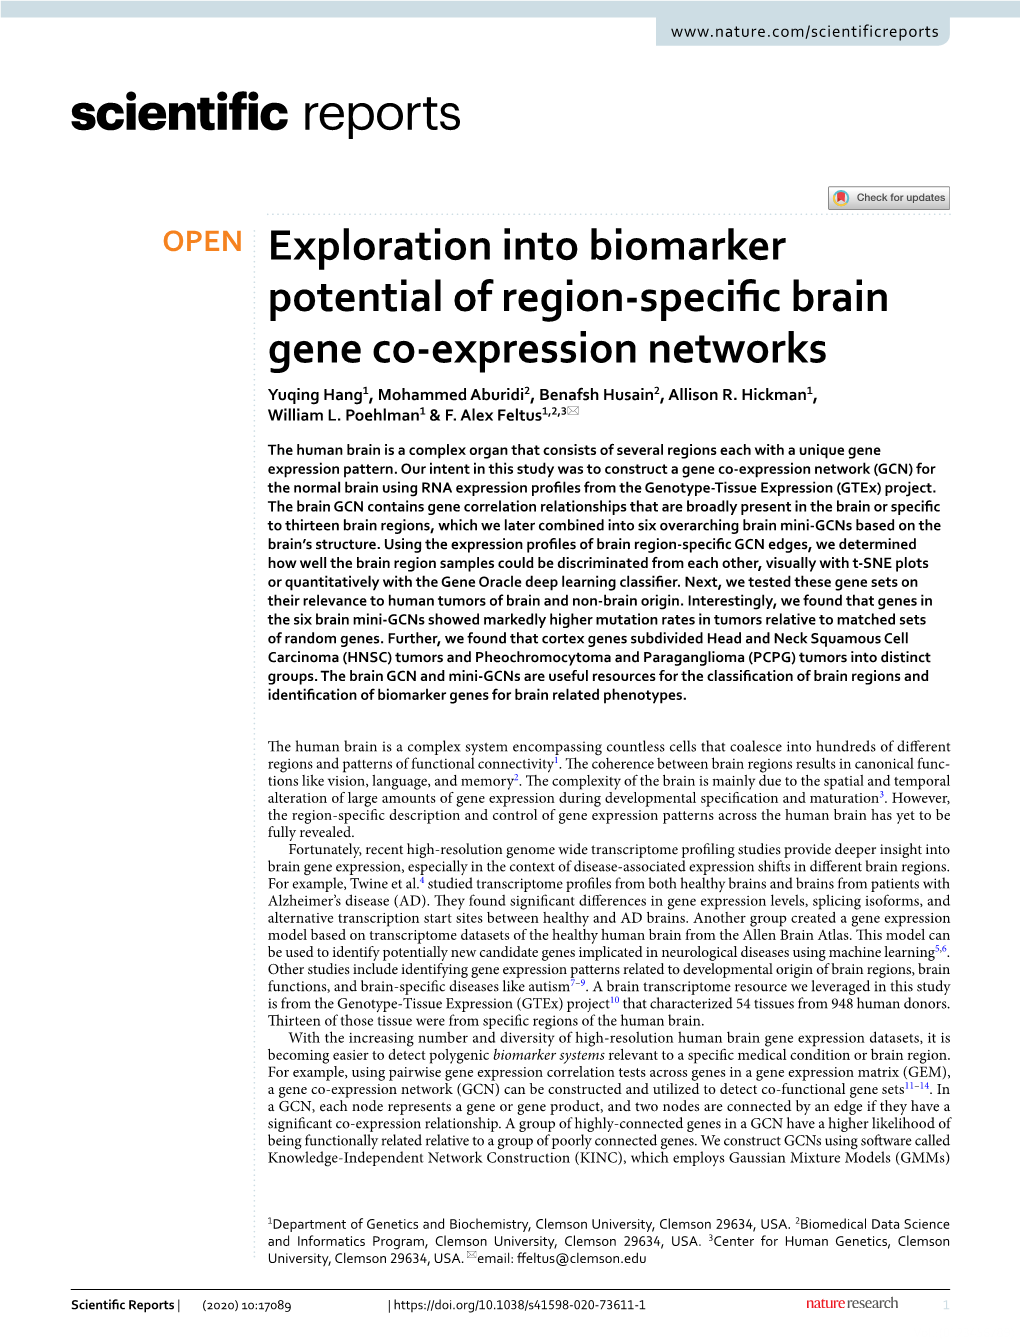 Exploration Into Biomarker Potential of Region-Specific Brain Gene Co